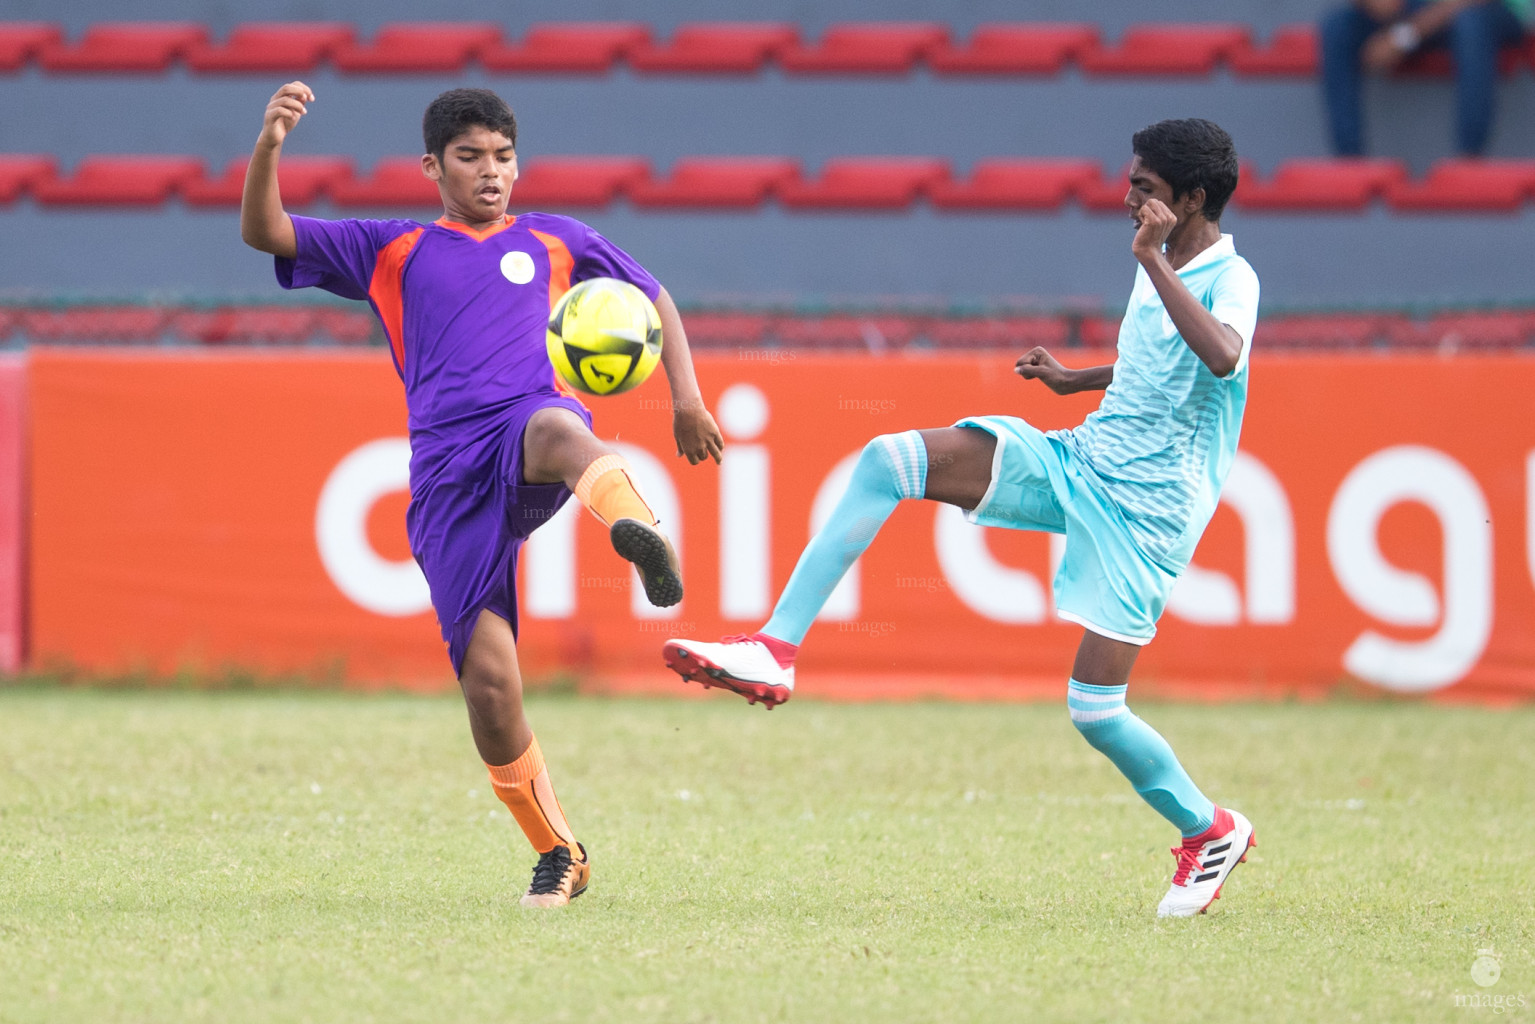 Ghiyasuddin School vs Resend School in Mamen Inter-School Football Tournament 2019 (U15) on 28th February 2019, Monday in Male' Maldives (Images.mv Photo: Suadh Abdul Sattar)